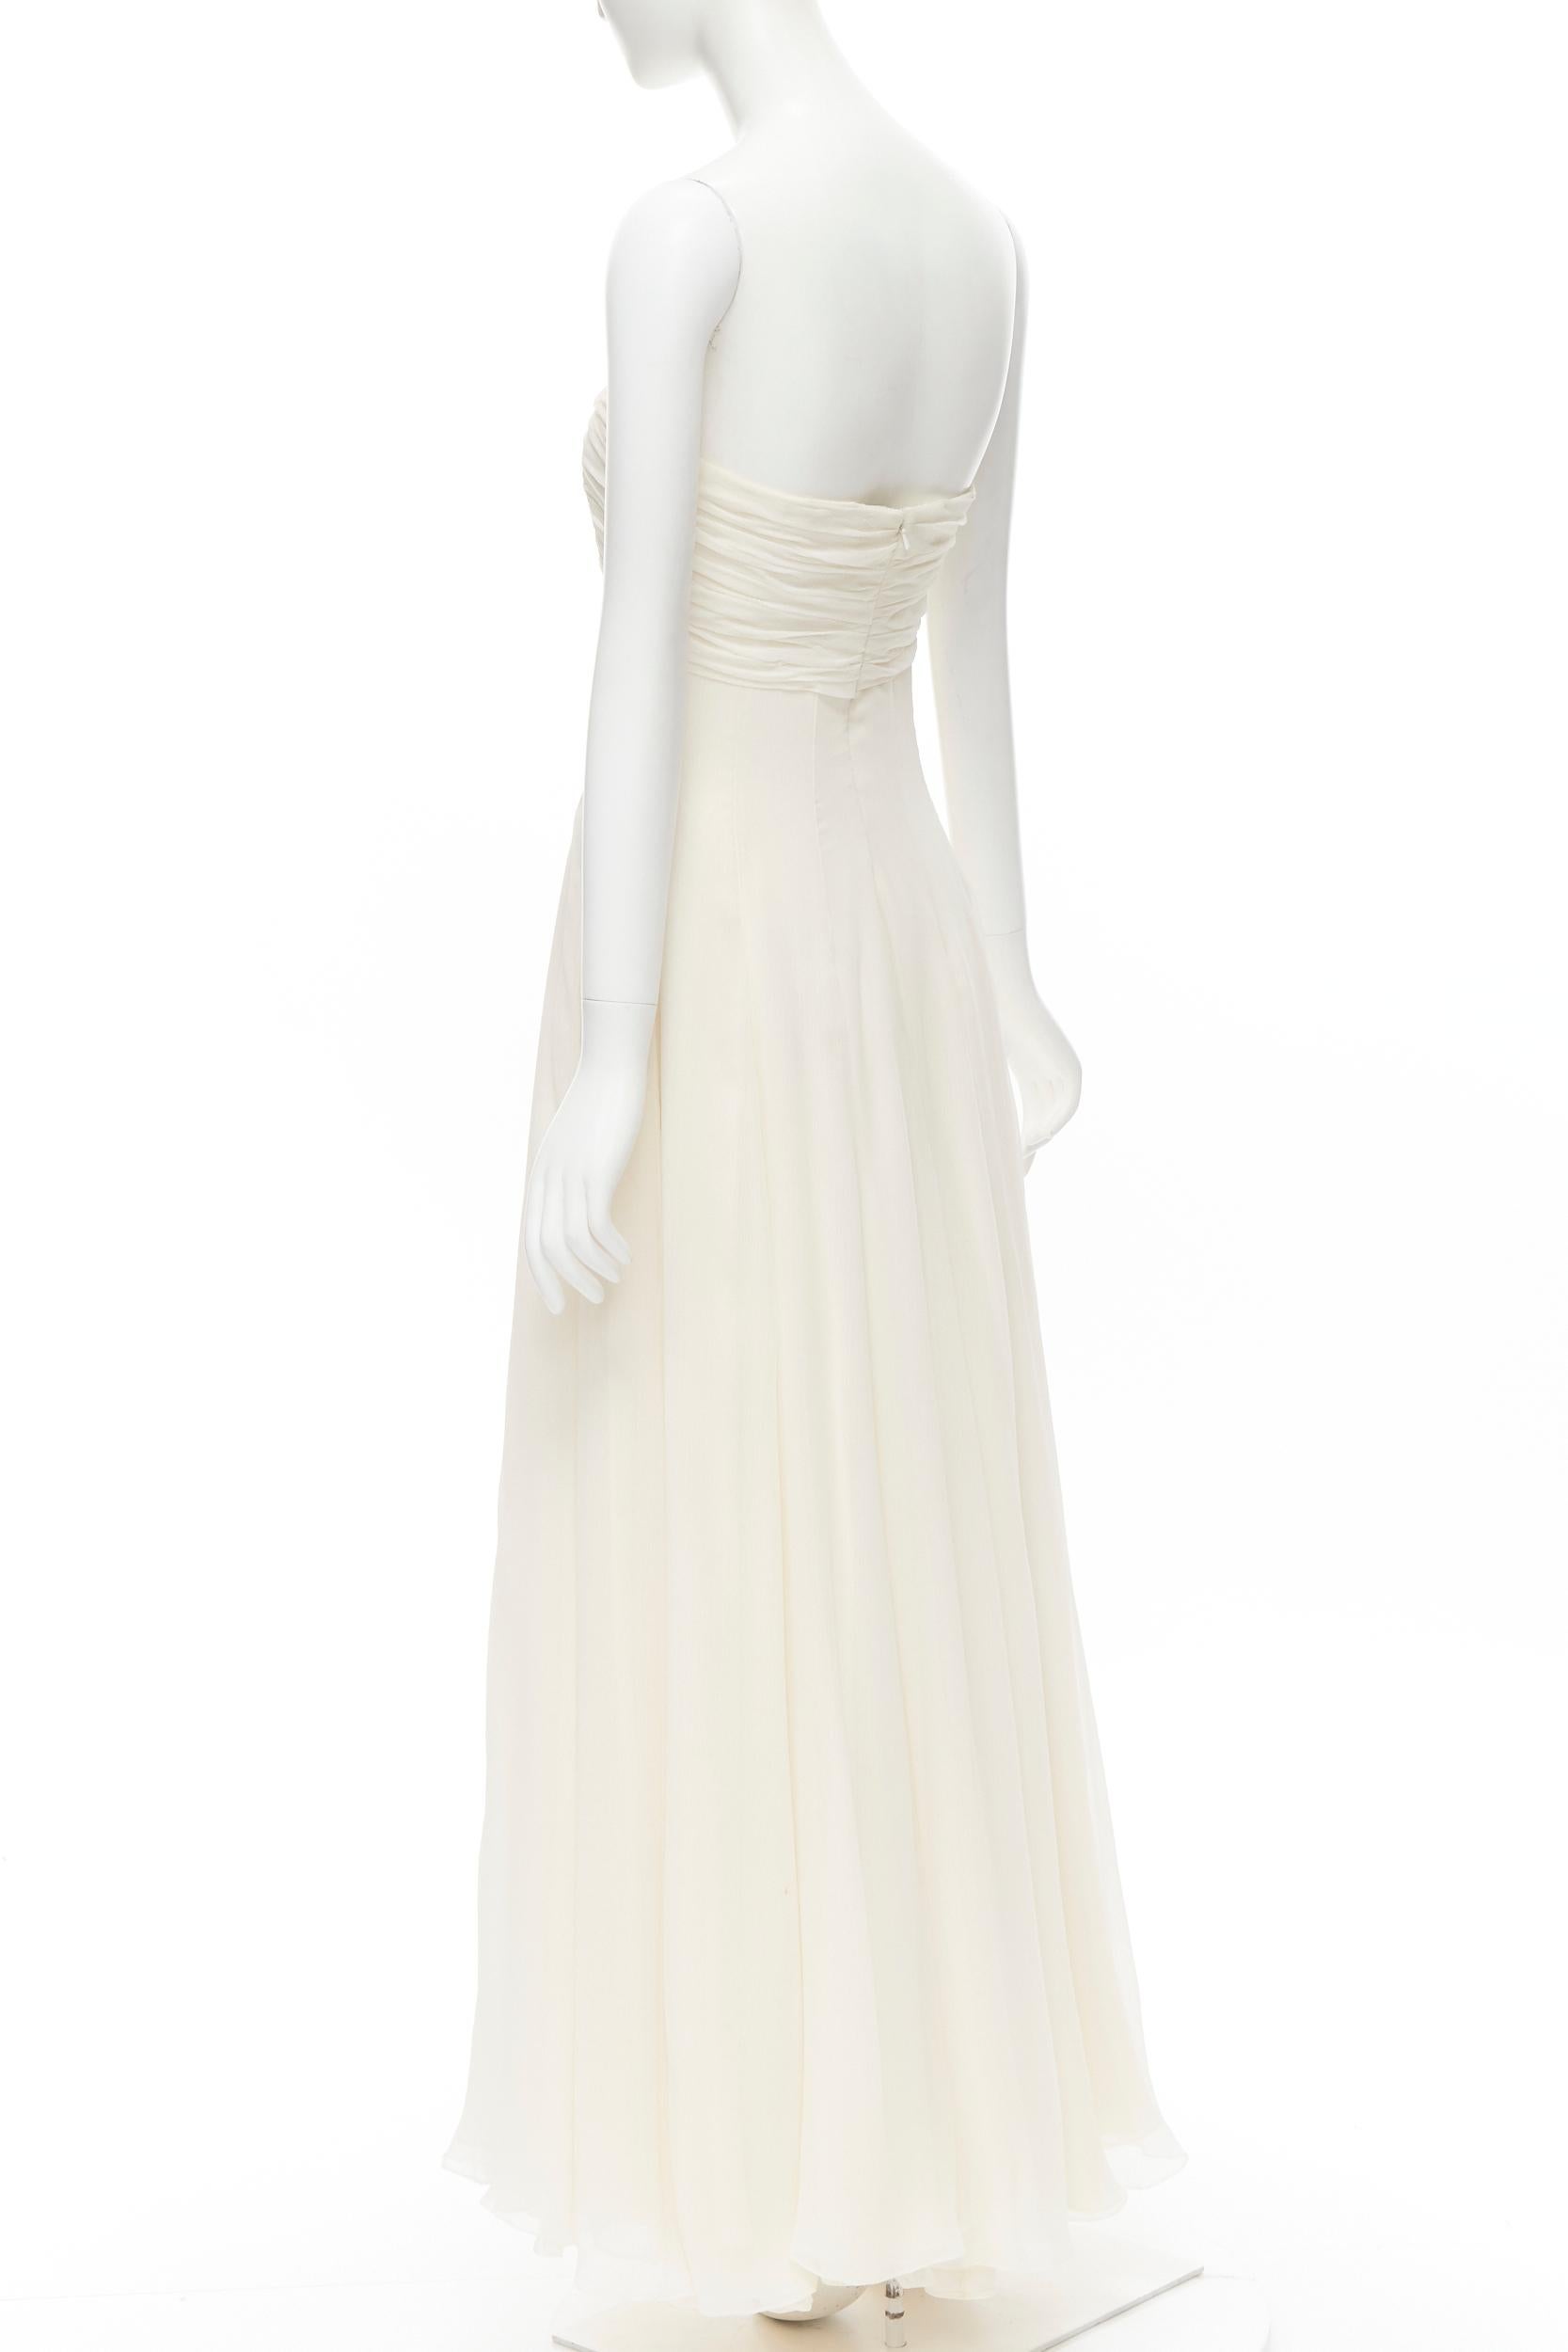 Women's OSCAR DE LA RENTA ivory white boned corset strapless evening gown dress US0 XS